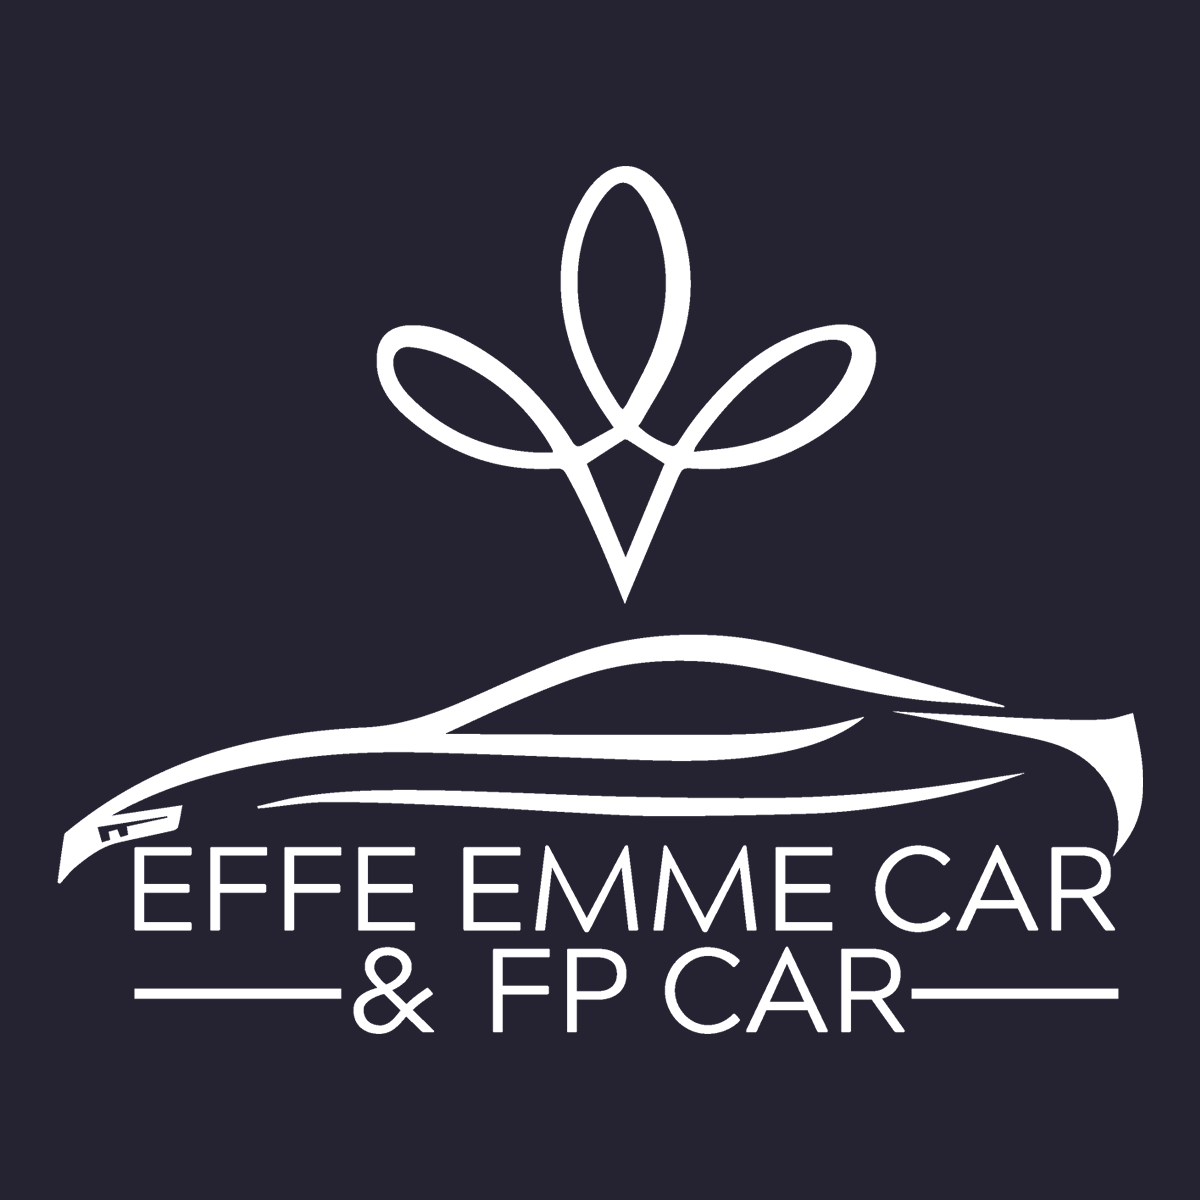 Effe Emme Car